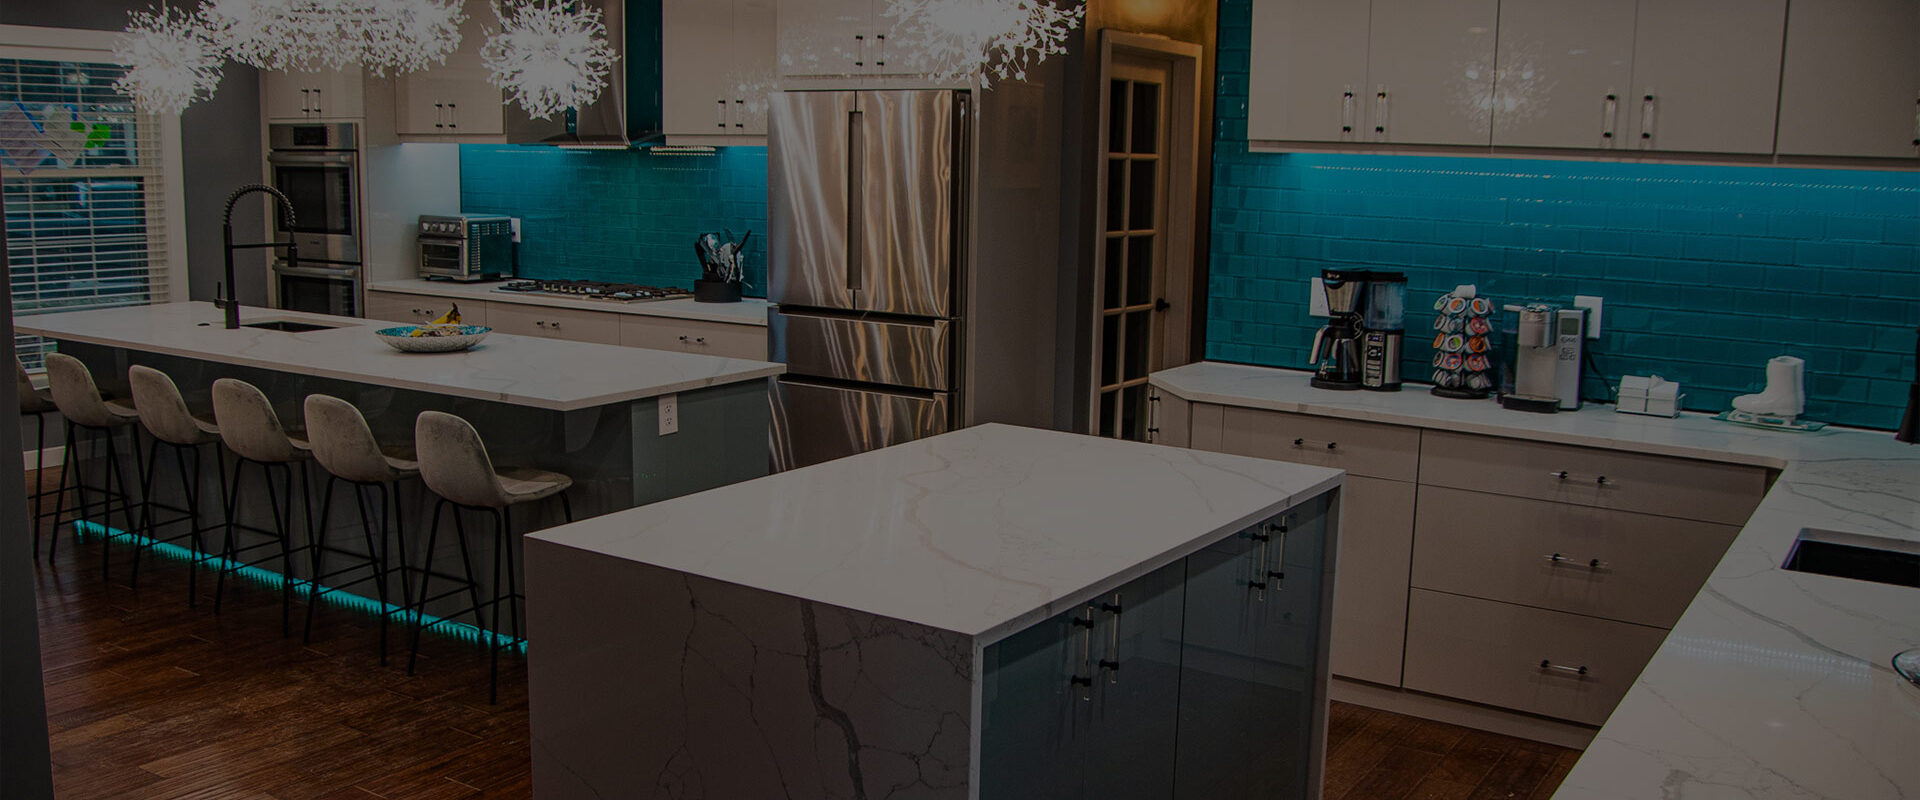 luxury kitchen interiors remodeled williamstone mi